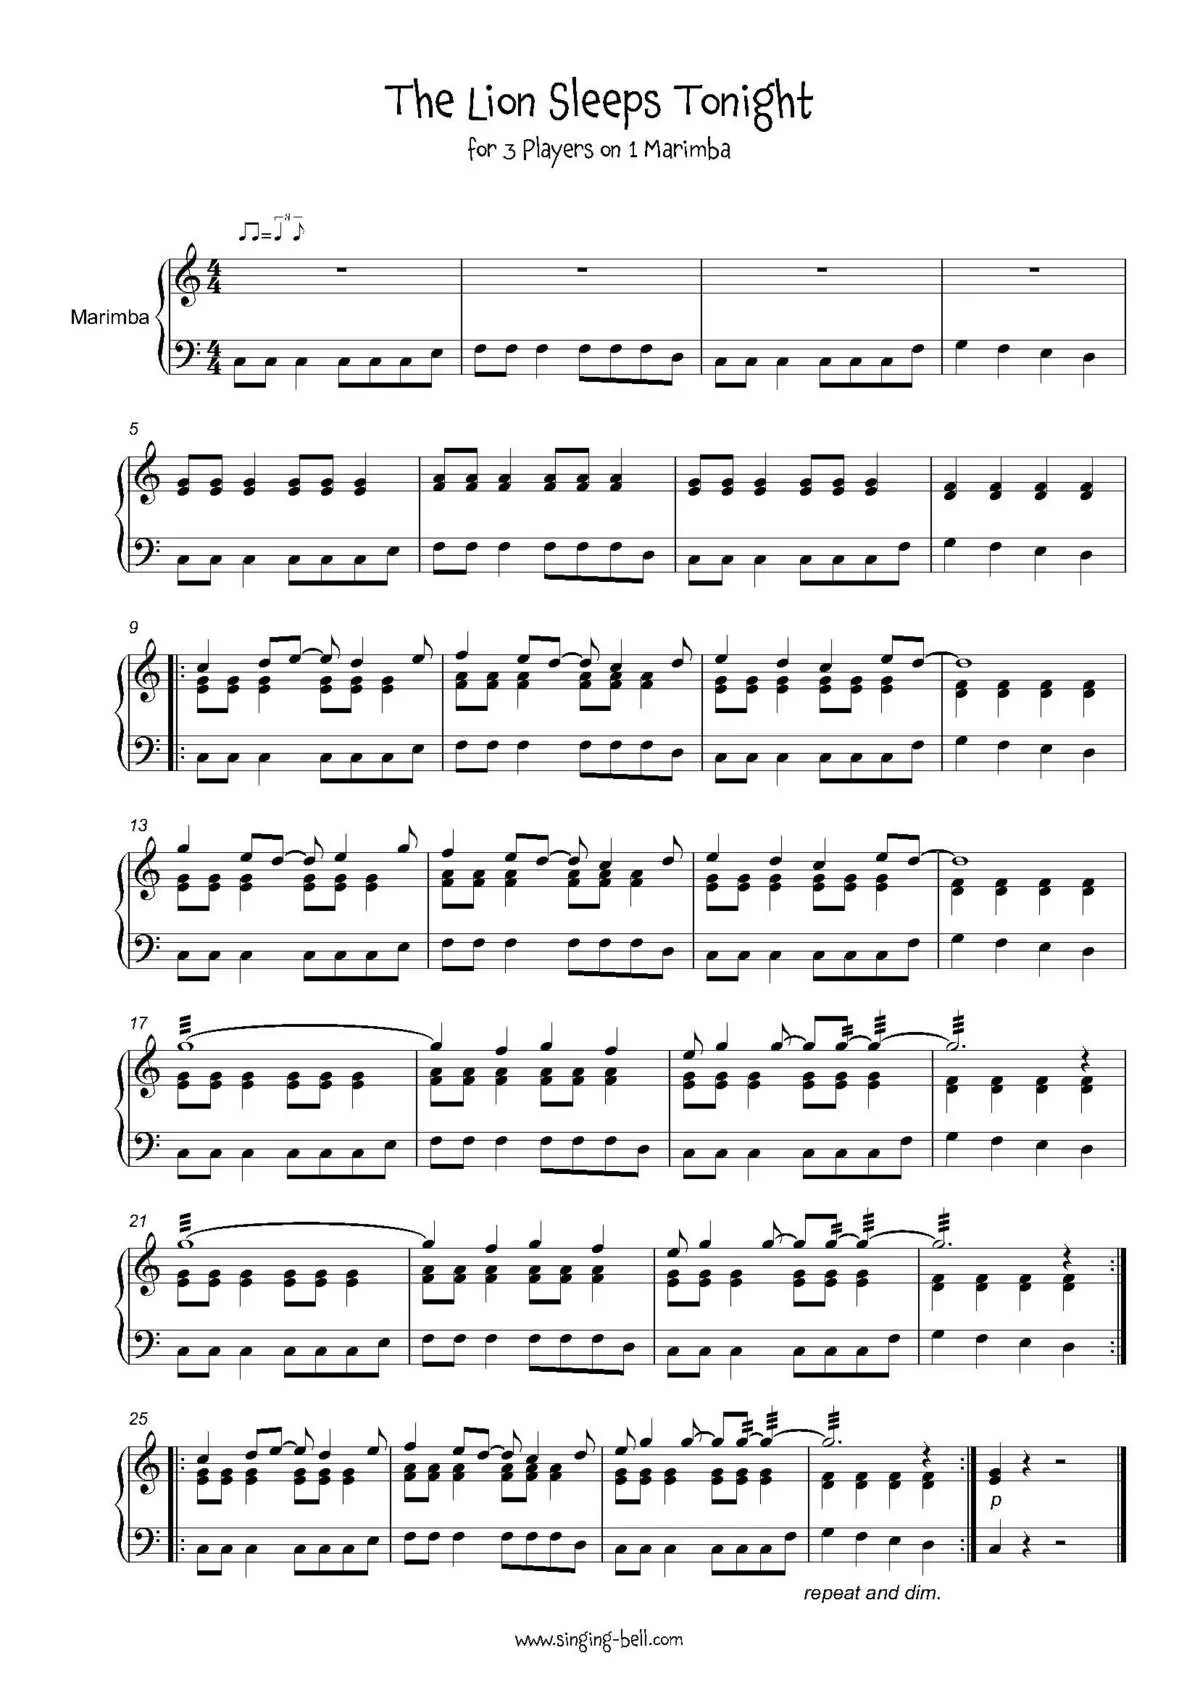 The-Lion-Sleeps-Tonight-marimba-sheet-music-singing-bell